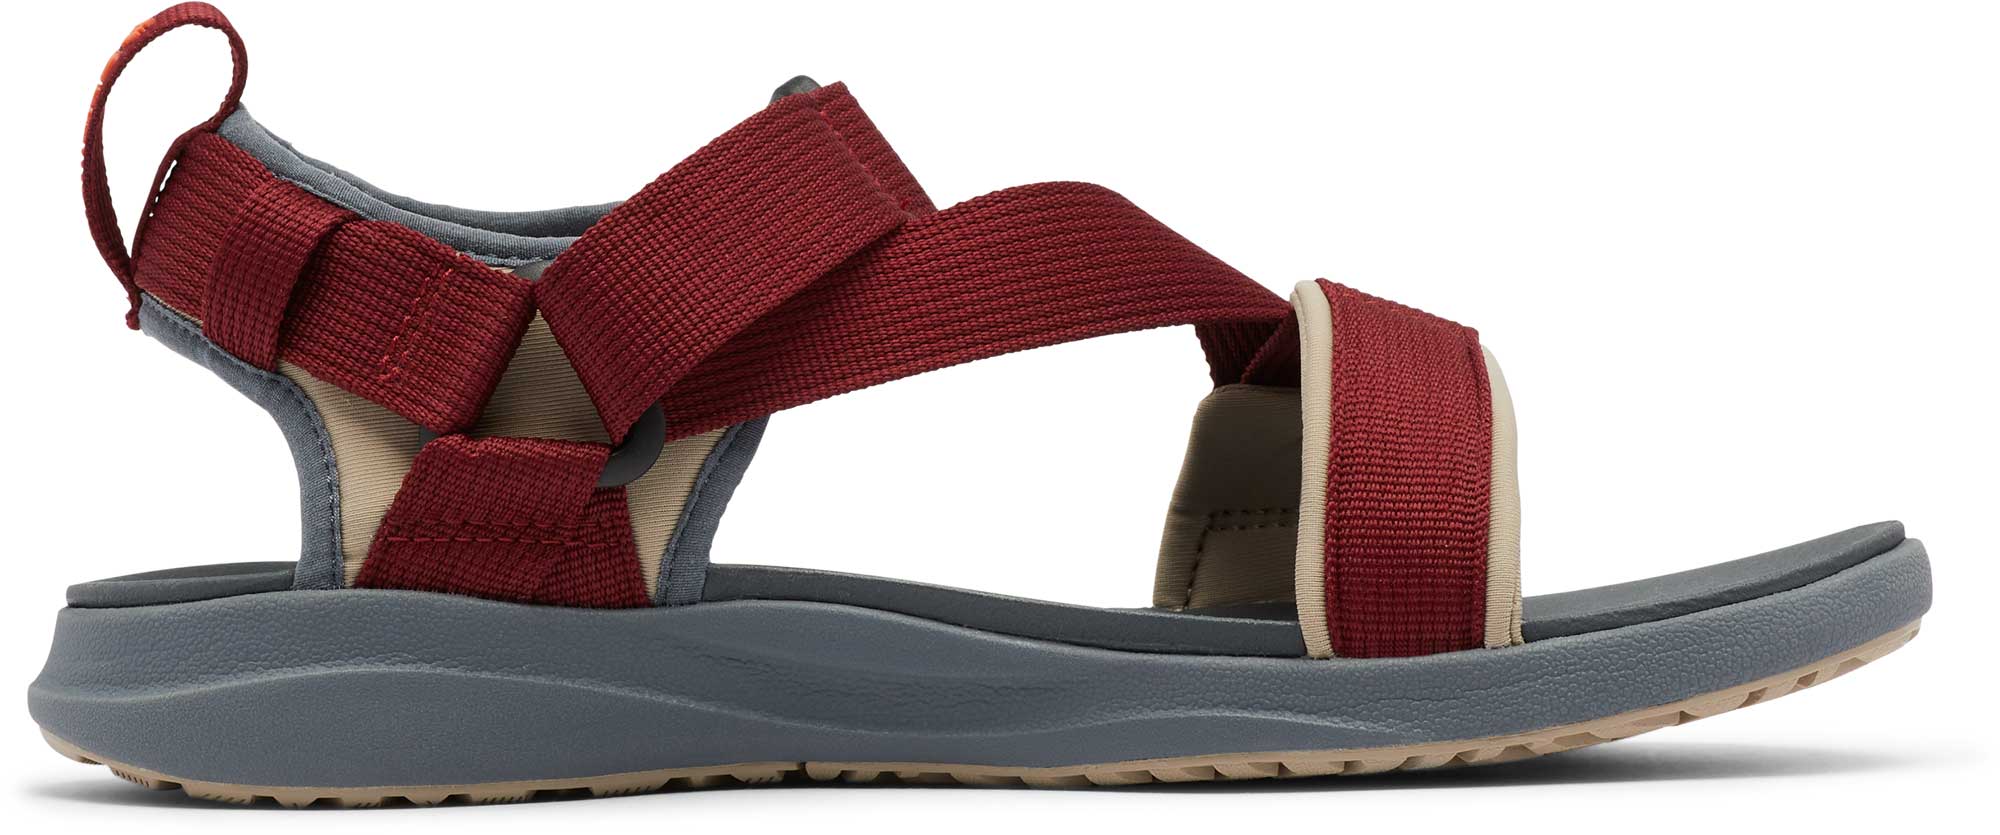 Men’s summer sandals